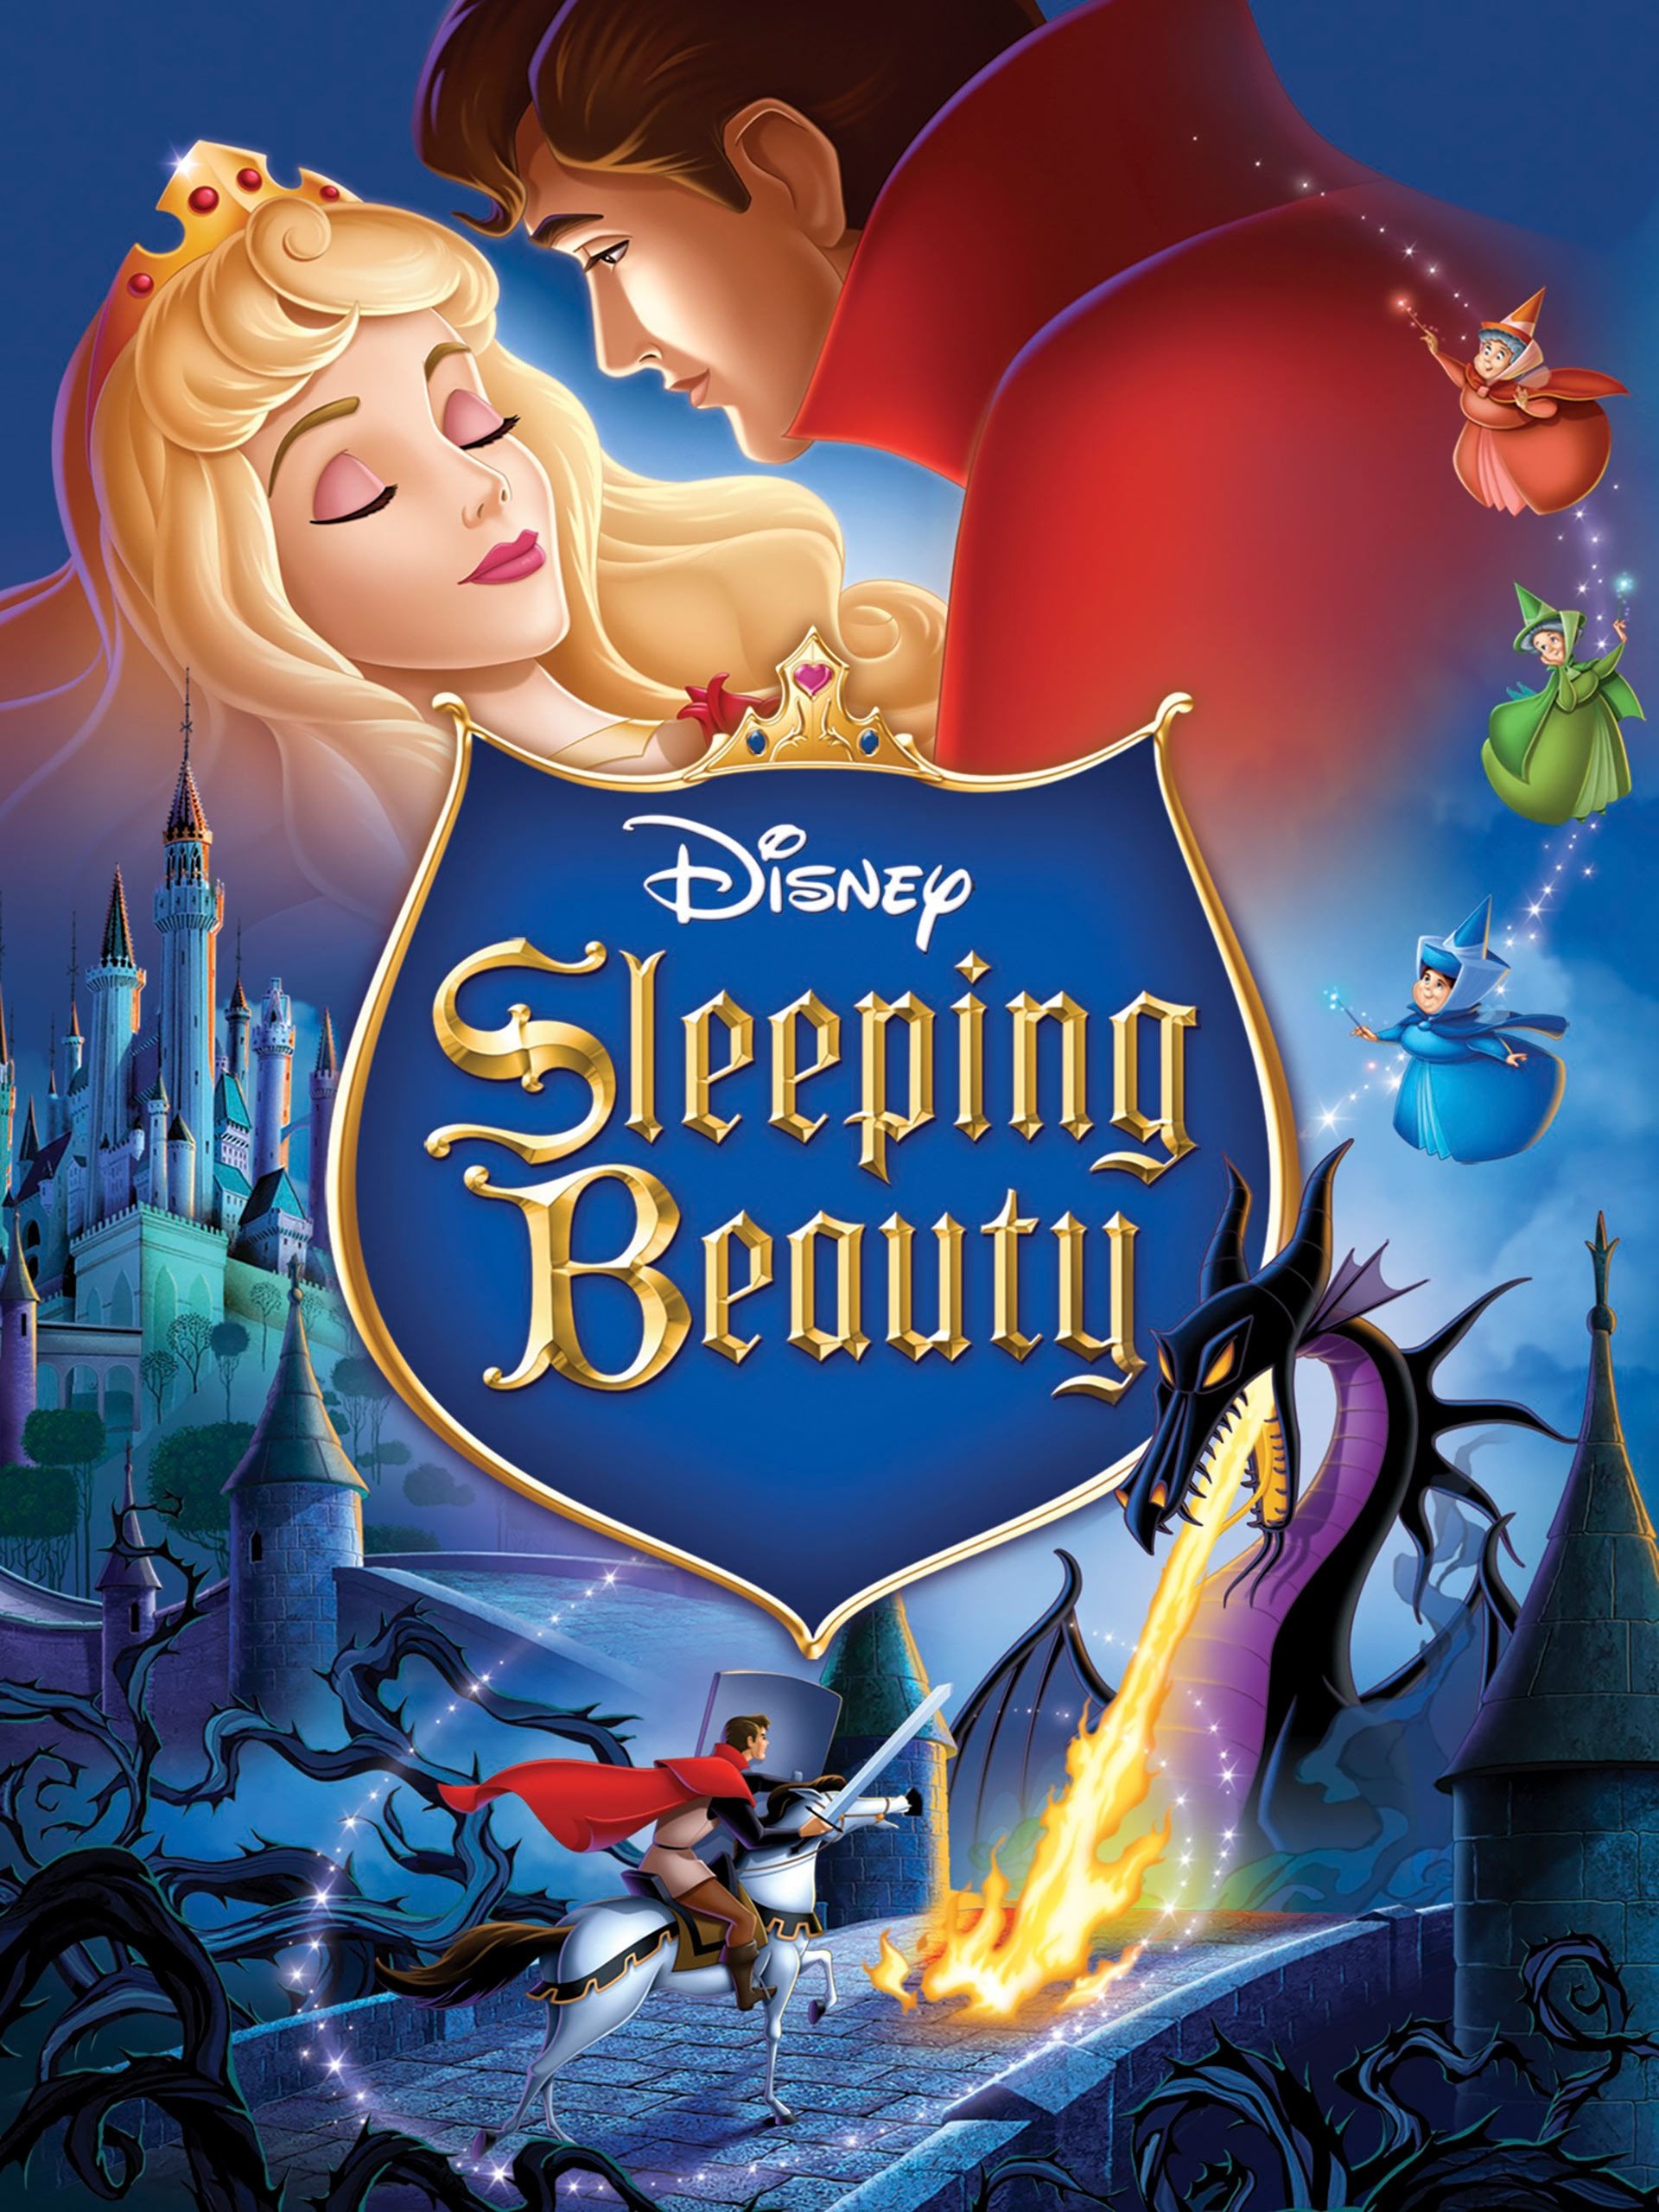 Sleeping Beauty (1959) เจ้าหญิงนิทรา - ดูหนังใหม่ PanNungHD